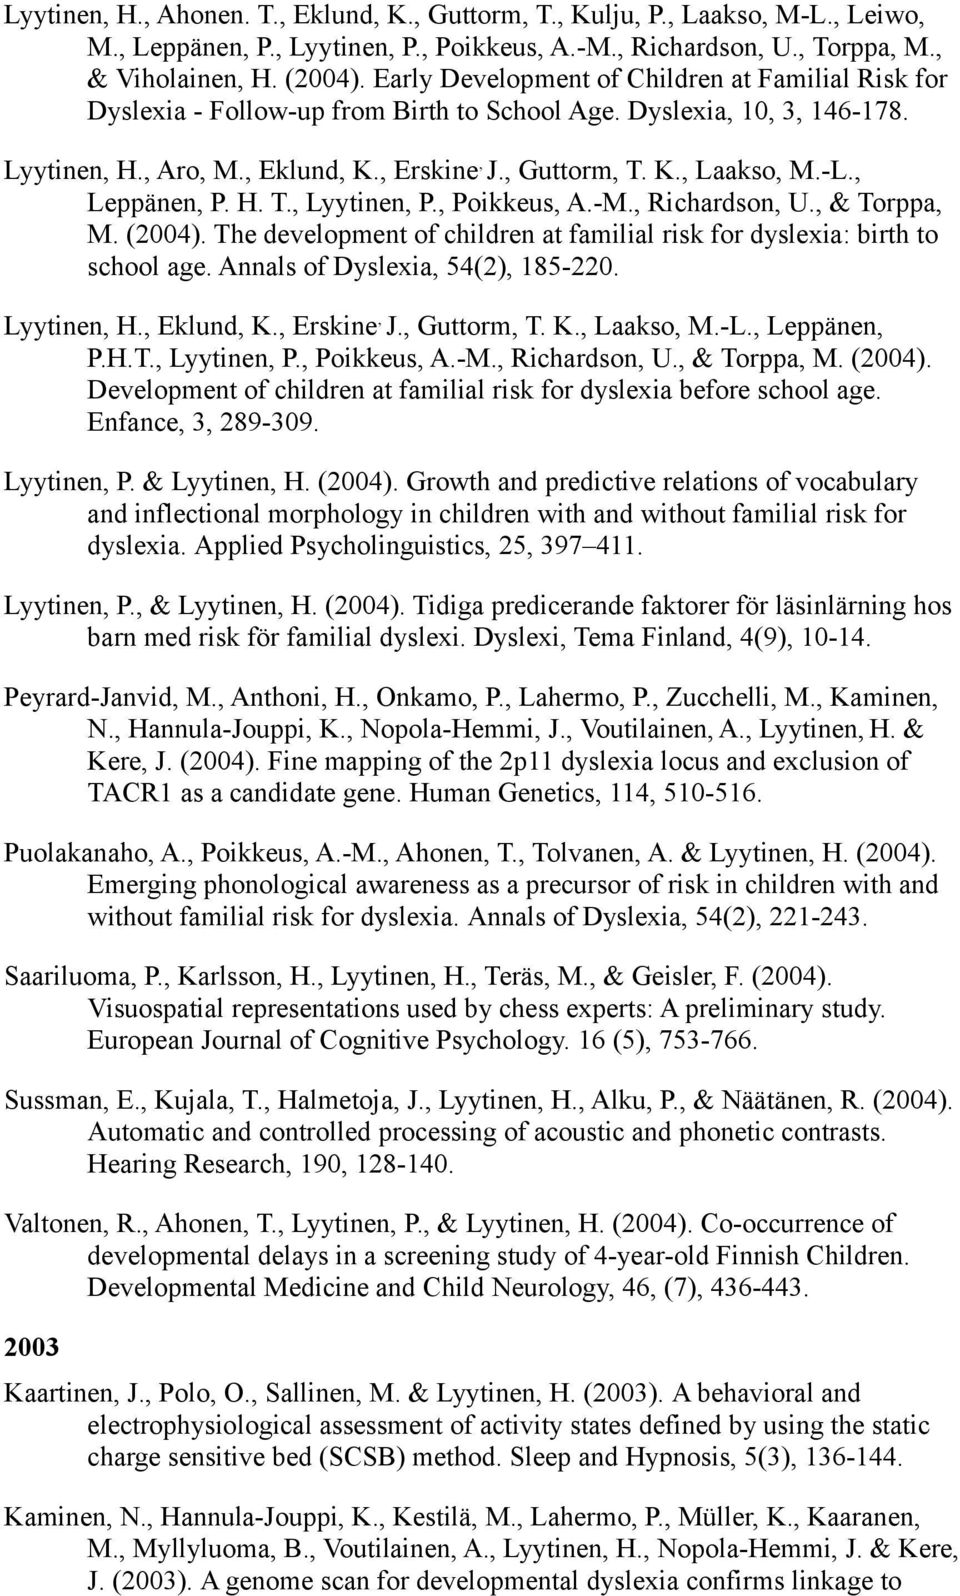 -L., Leppänen, P. H. T., Lyytinen, P., Poikkeus, A.-M., Richardson, U., & Torppa, M. (2004). The development of children at familial risk for dyslexia: birth to school age.